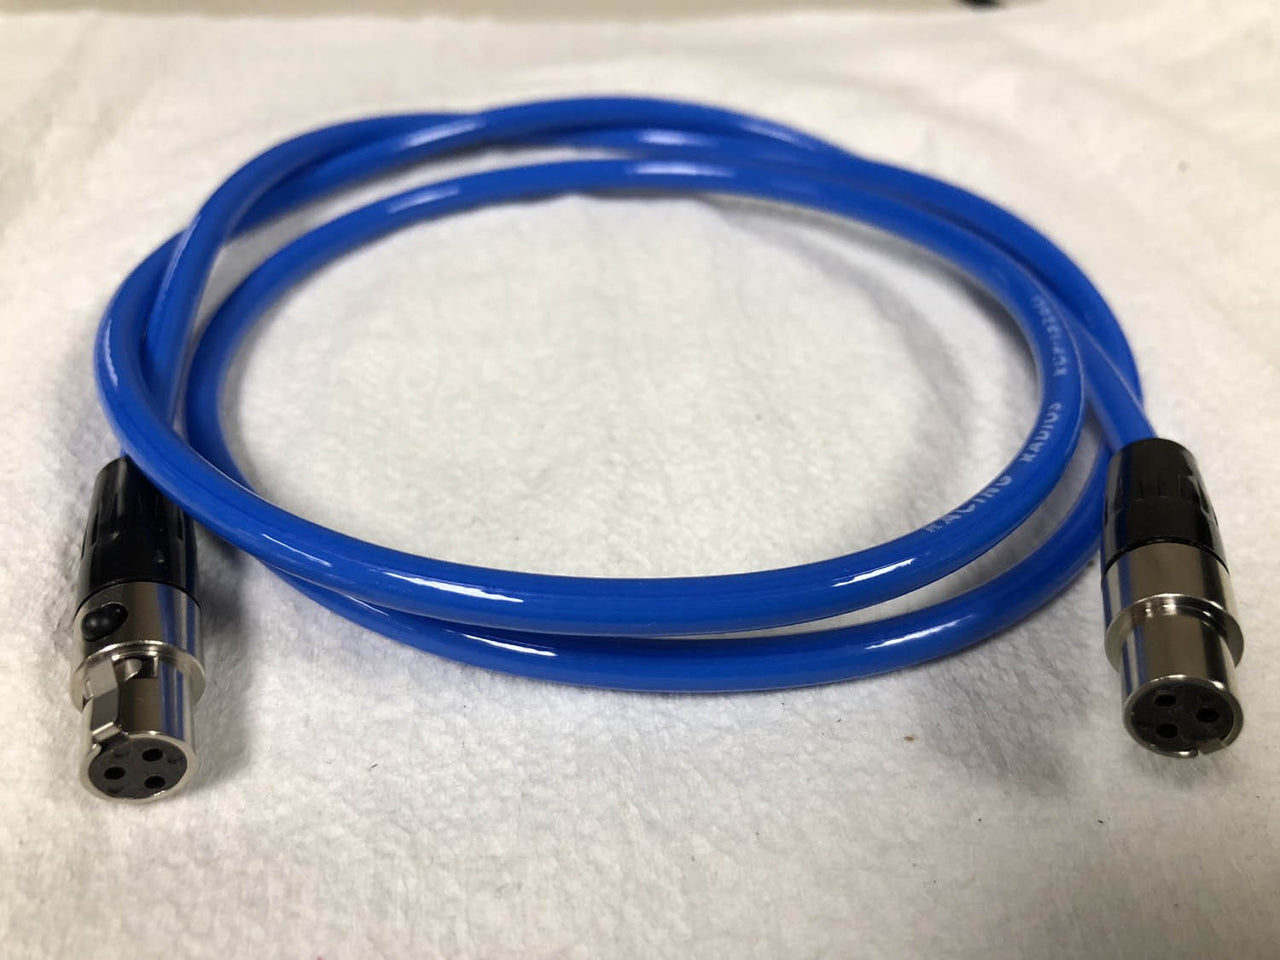 Intercom Push To Talk Adapter Cable